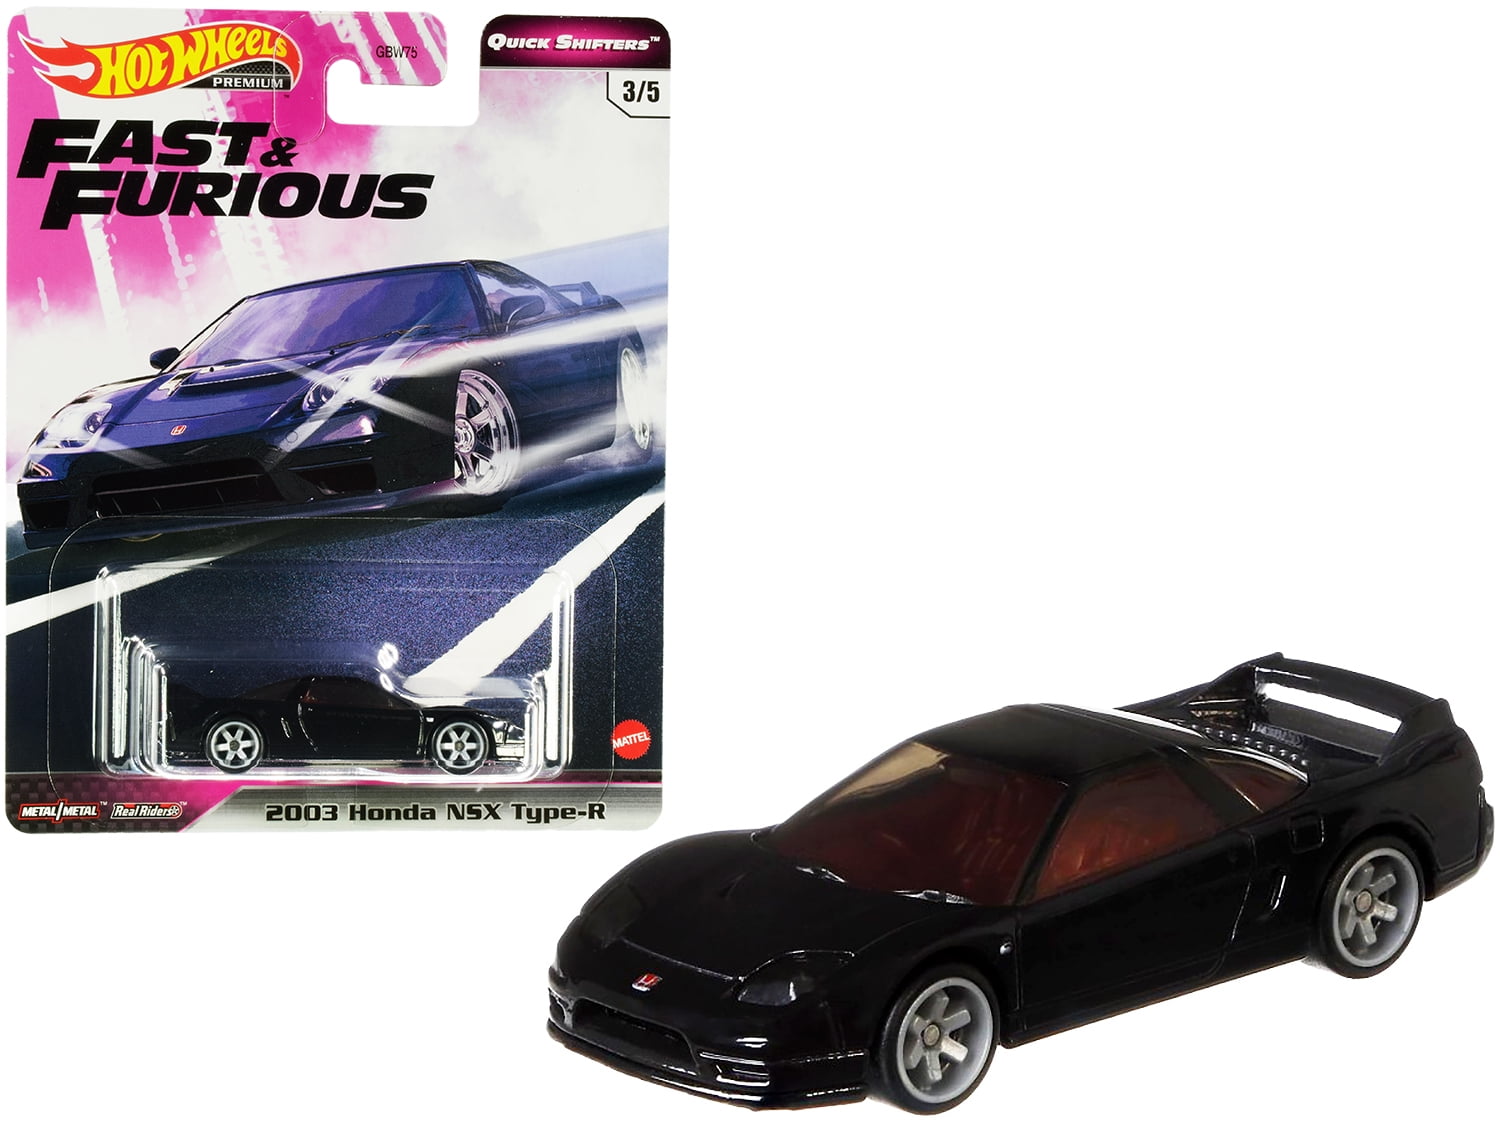 1/64 Honda NSX GT Racing Car Diecast Metal Car Model Toys Kids Gift